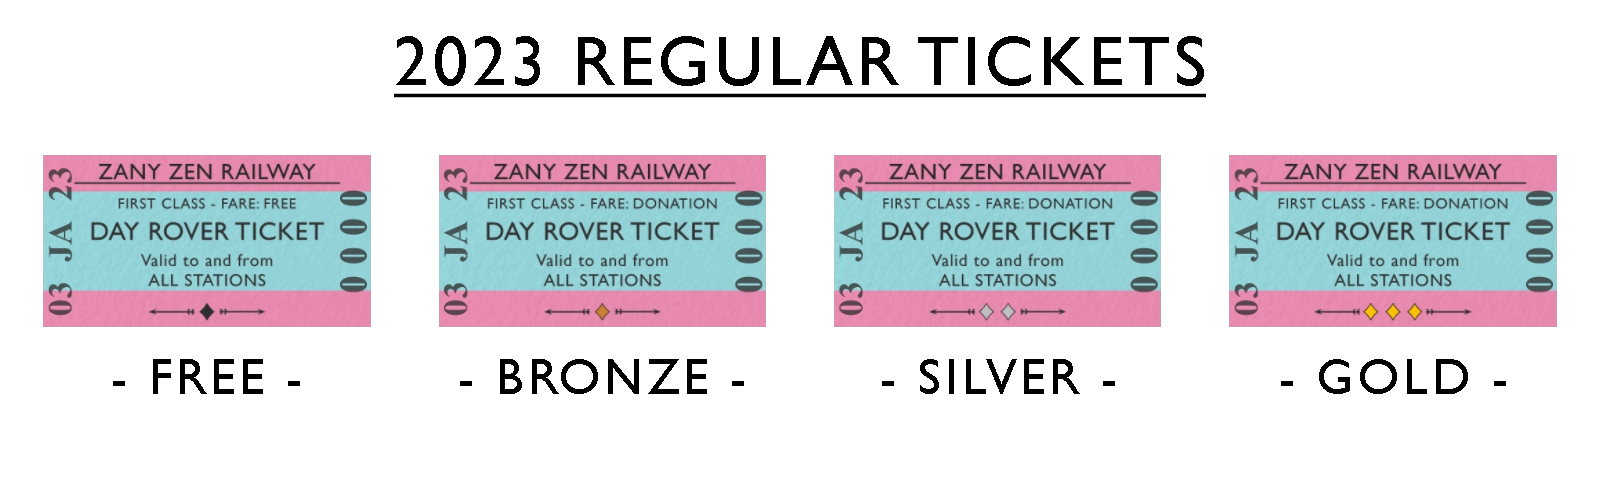 The Zany Zen Railway Regular 2023 Tickets